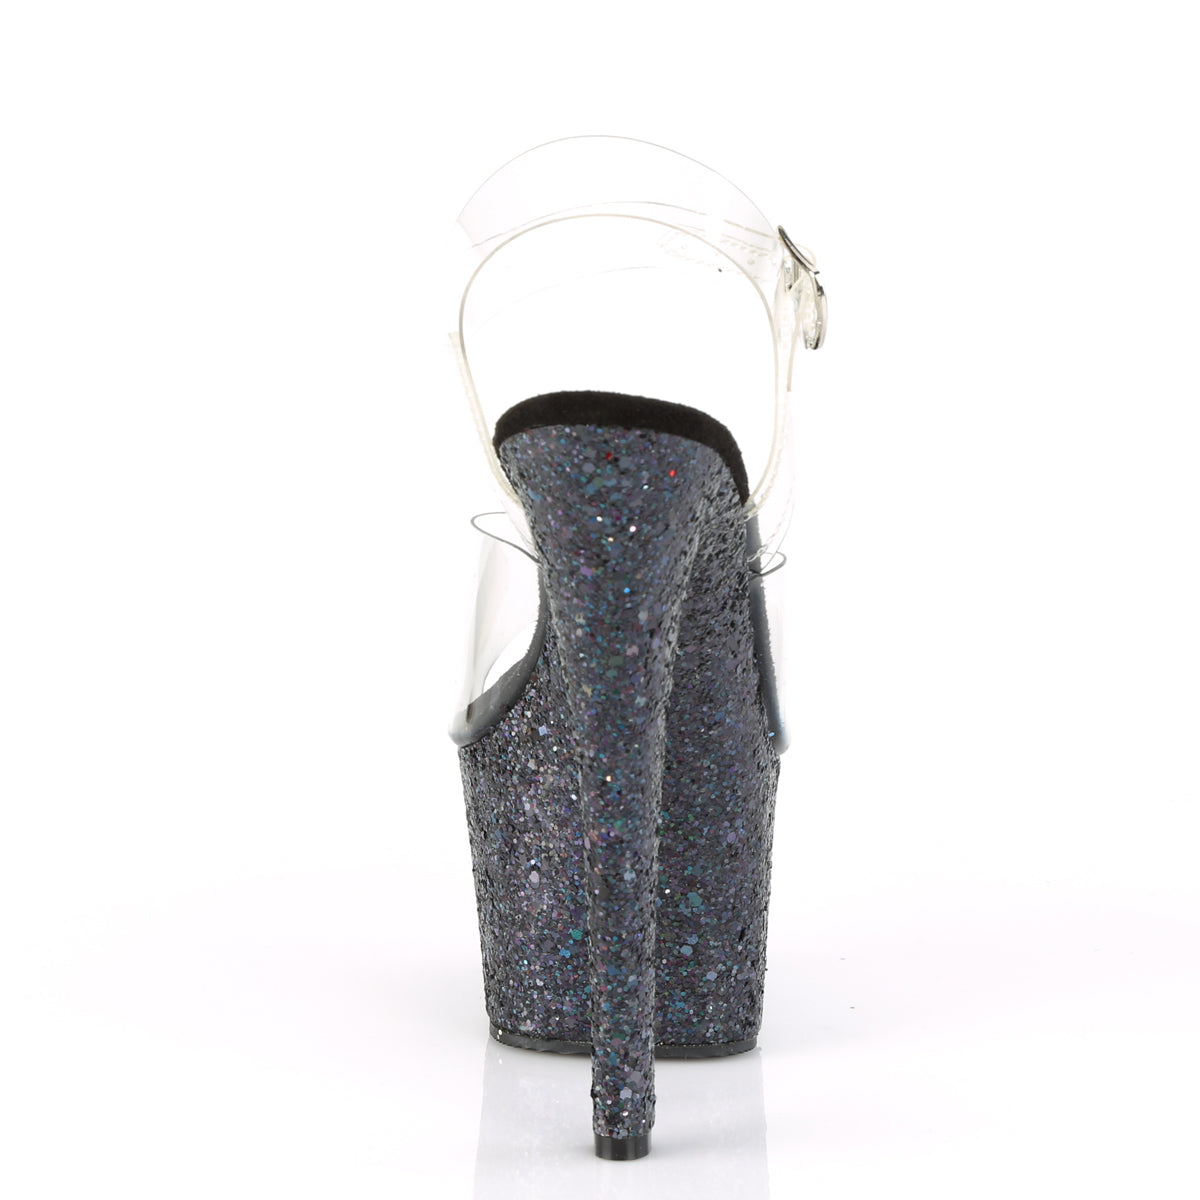 Pleaser Womens Sandals SKY-308LG Clr/Blk Multi Glitter